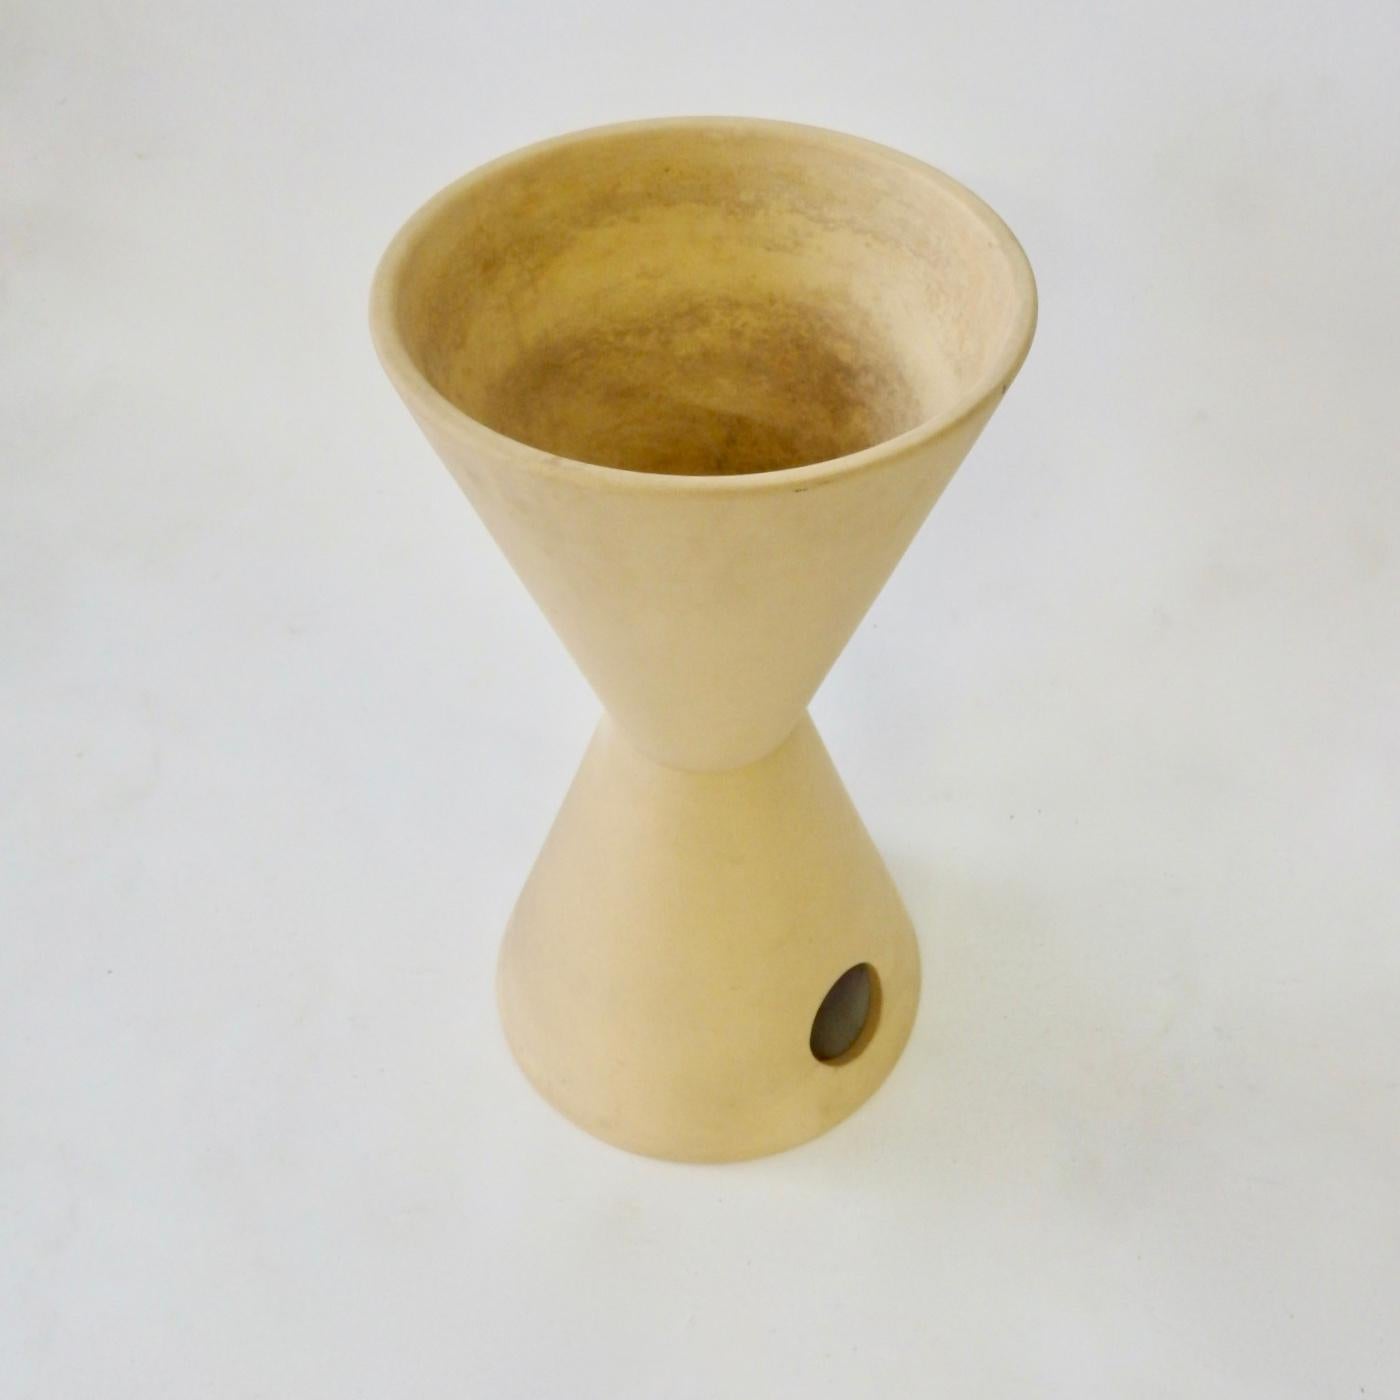 American Lagardo Tackett Bisque Finish Double Cone Planter Pot for Architectural Pottery